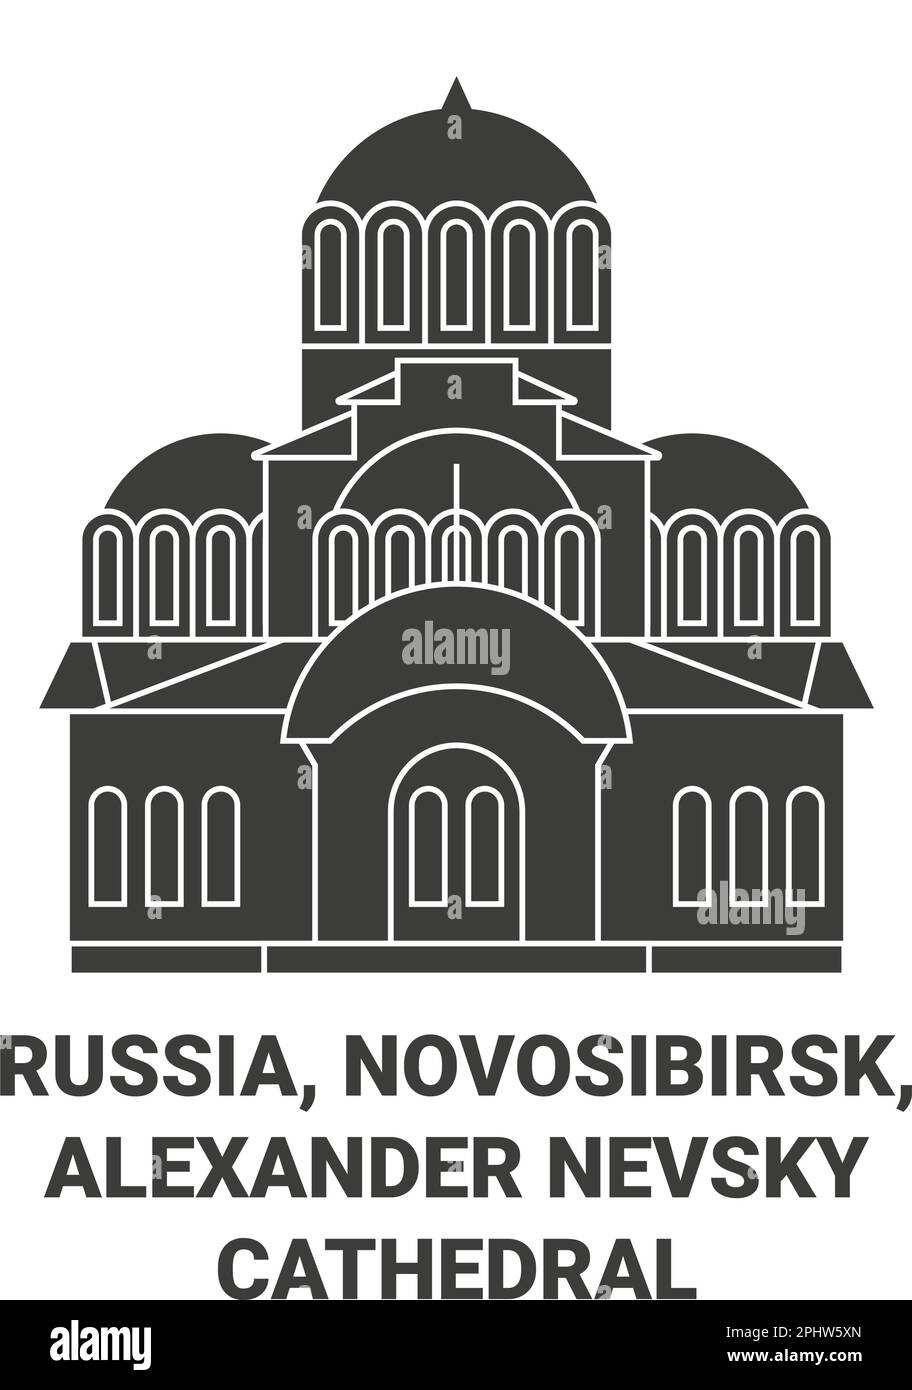 Russia, Novosibirsk, Alexander Nevsky Cathedral travel landmark vector illustration Stock Vector